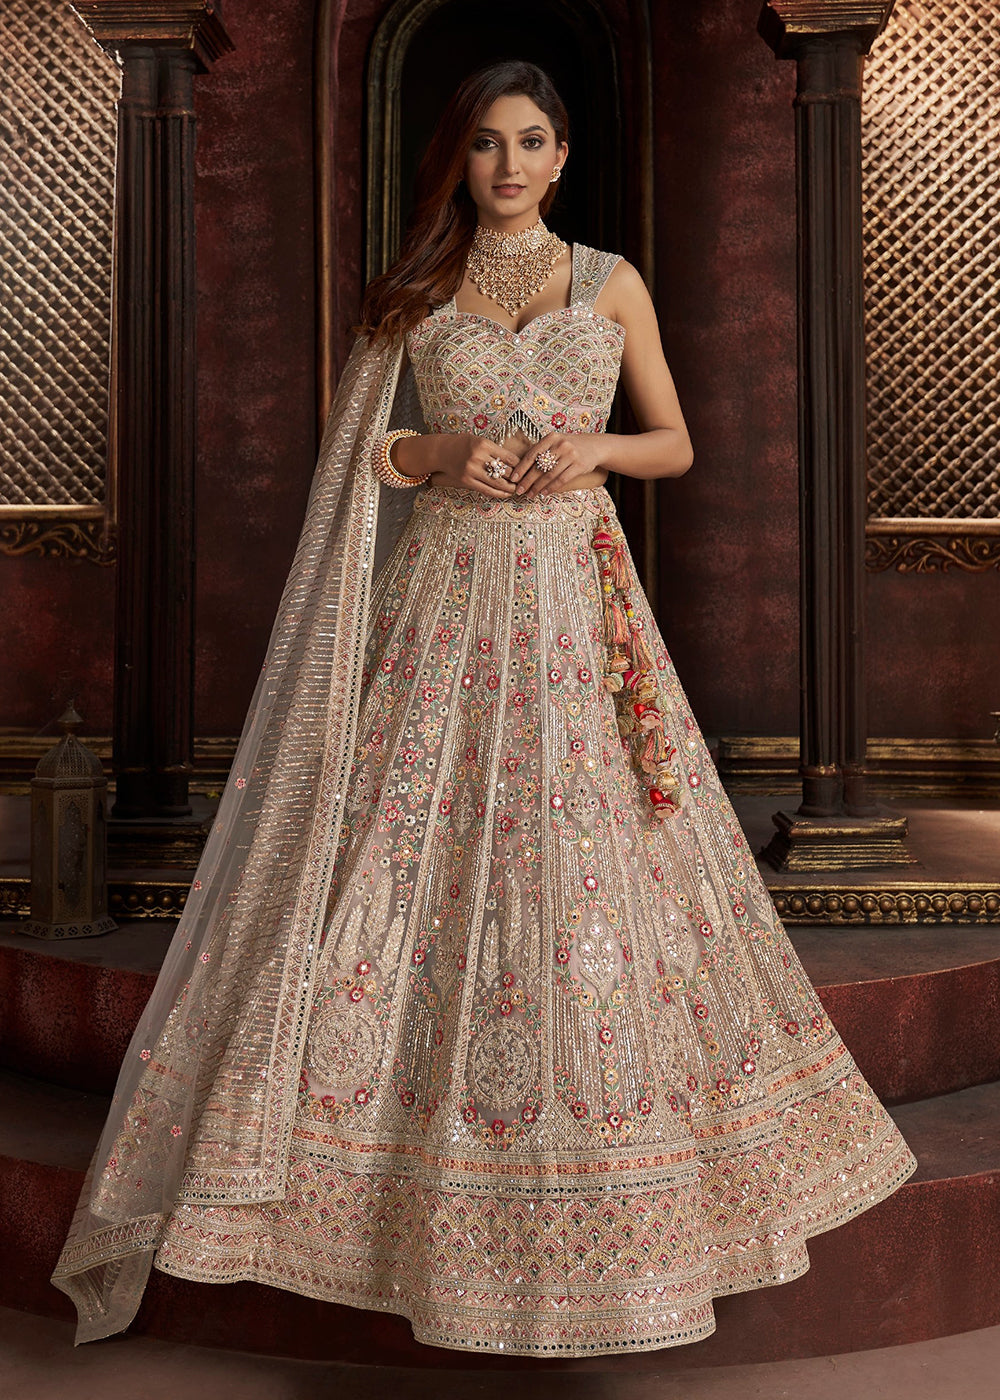 Buy Now Heavy Embroidered Multicolor Ivory Net Bridal Lehenga Choli Online in USA, UK, Canada & Worldwide at Empress Clothing. 